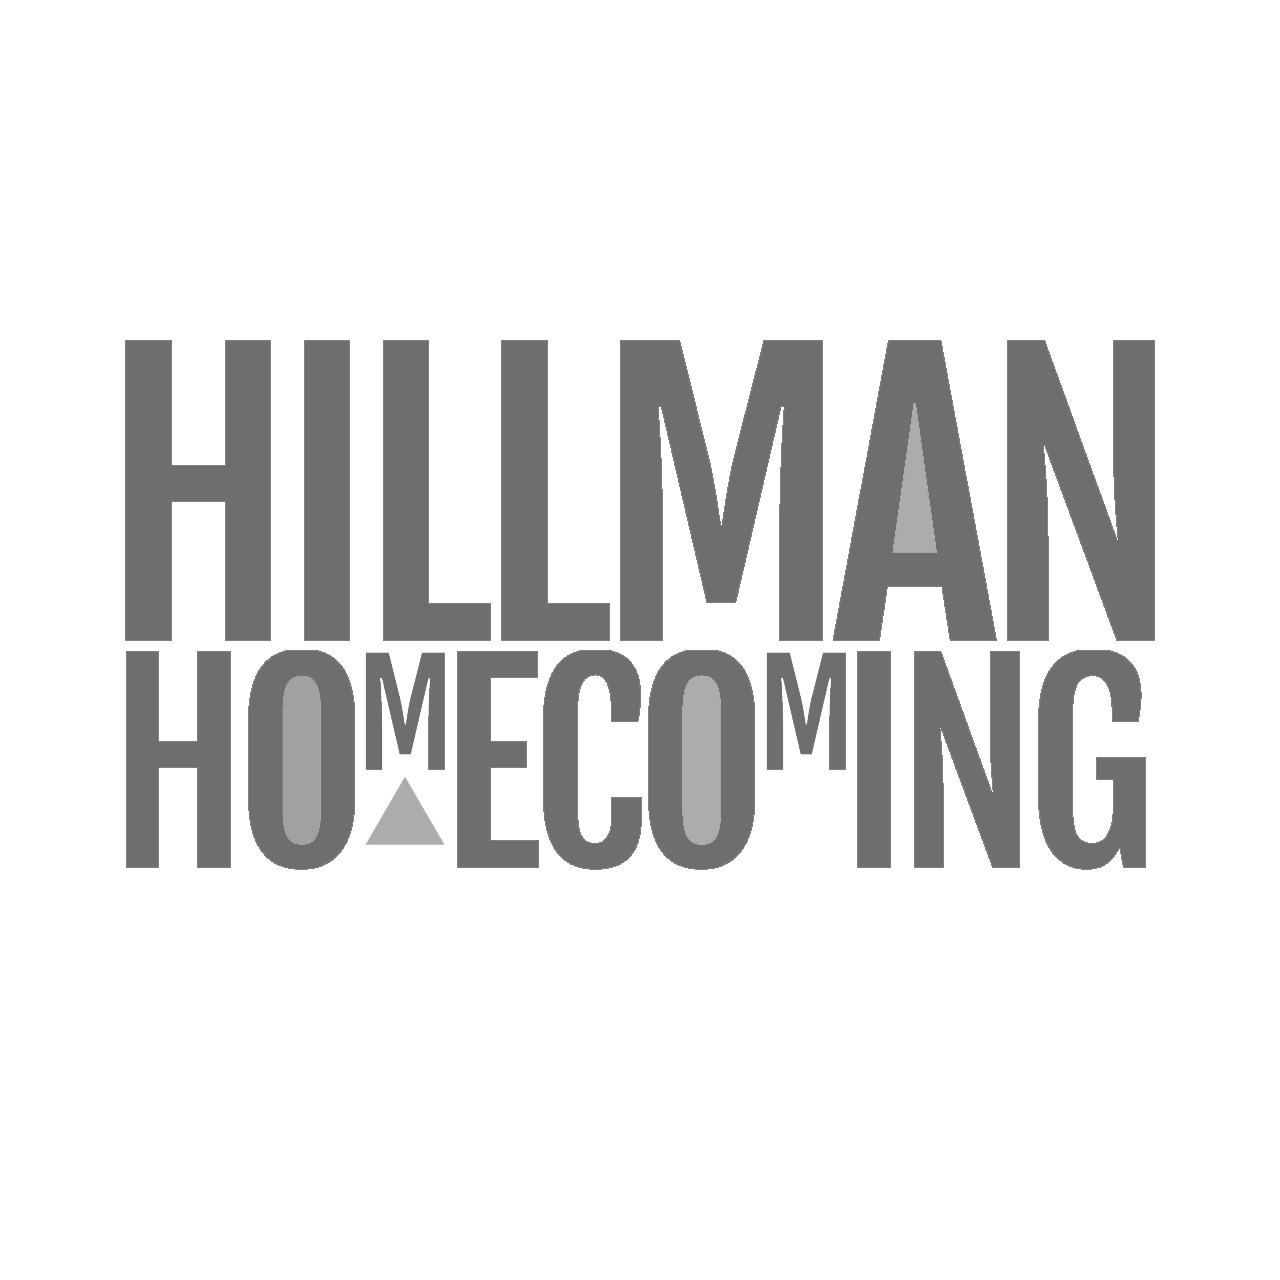 Hillman Desaturated copy.png